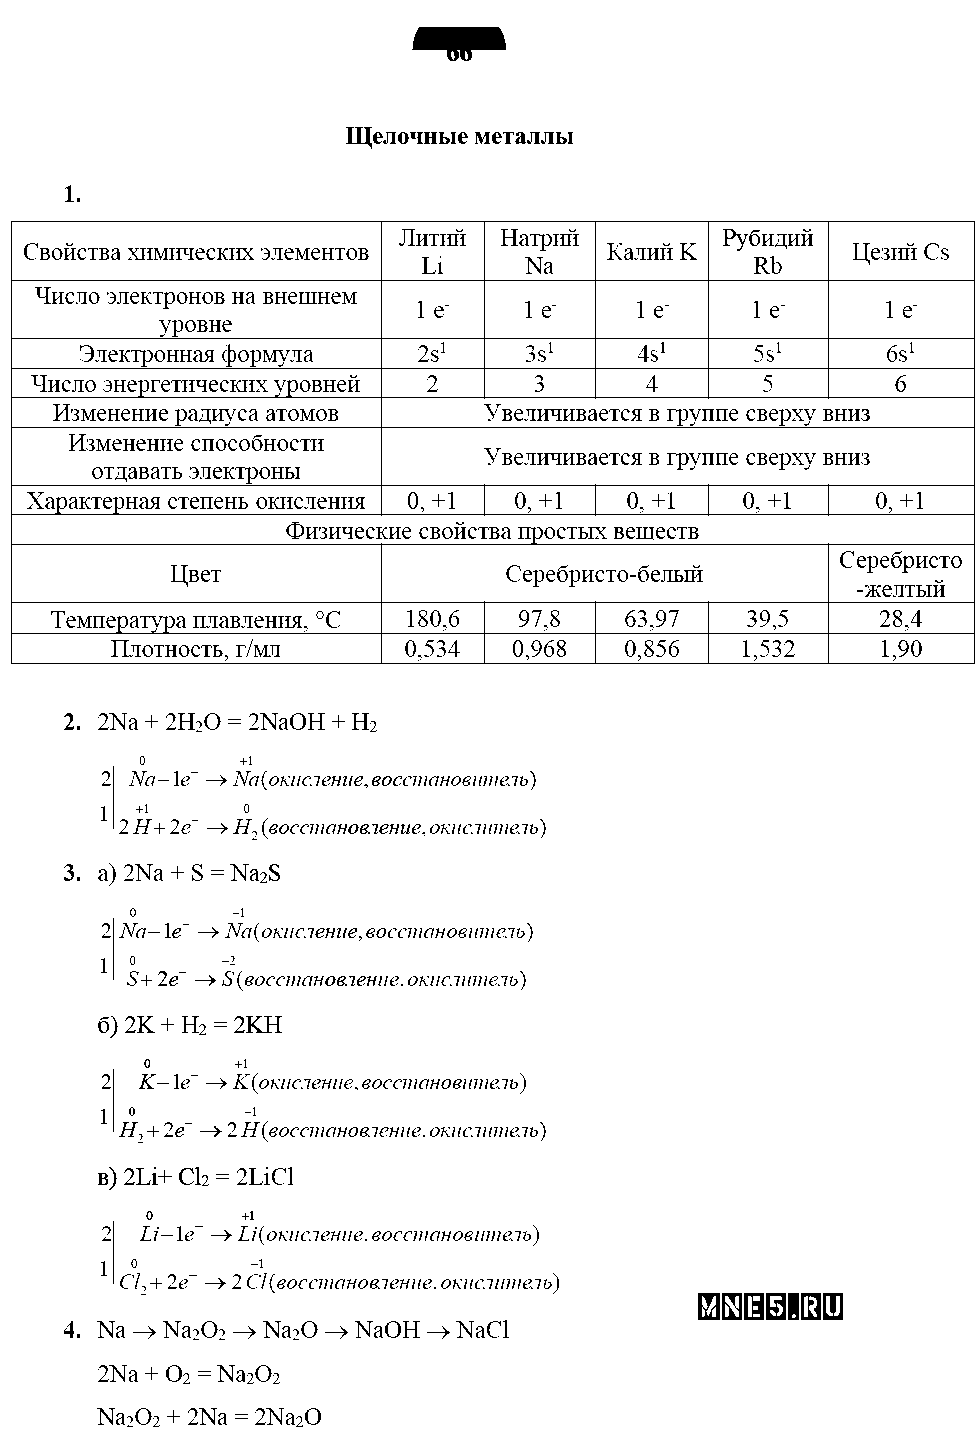 ГДЗ Химия 9 класс - стр. 66